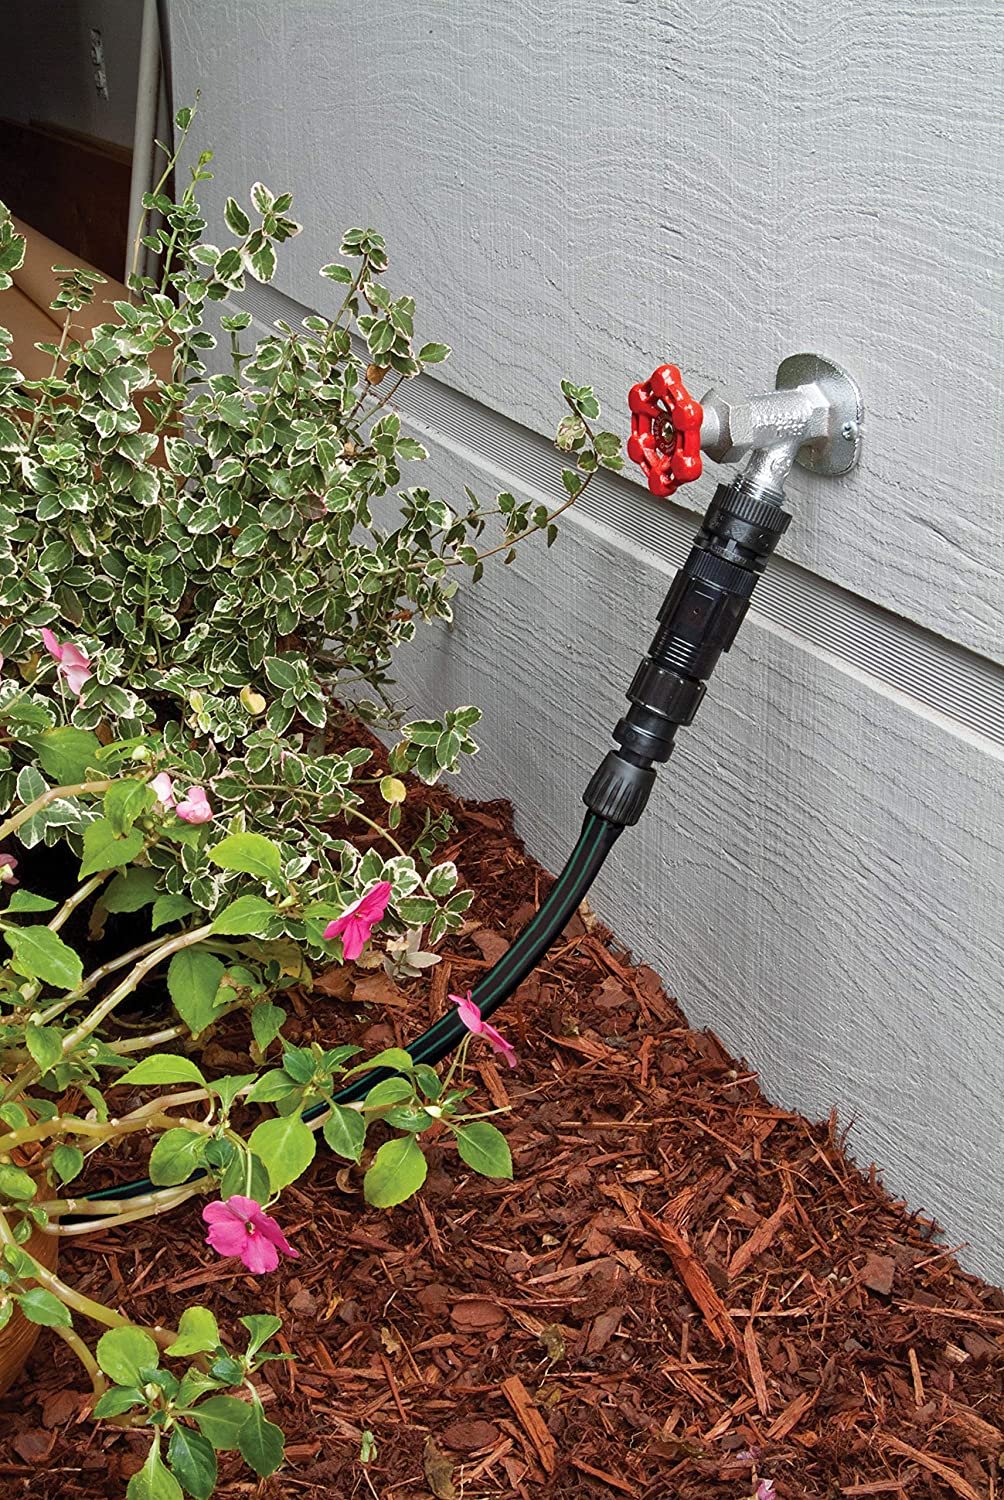 Rain Bird LNDDRIPKIT Drip Irrigation Landscape & Garden Watering Kit with Drippers, Micro-Bubblers and Micro-Sprays